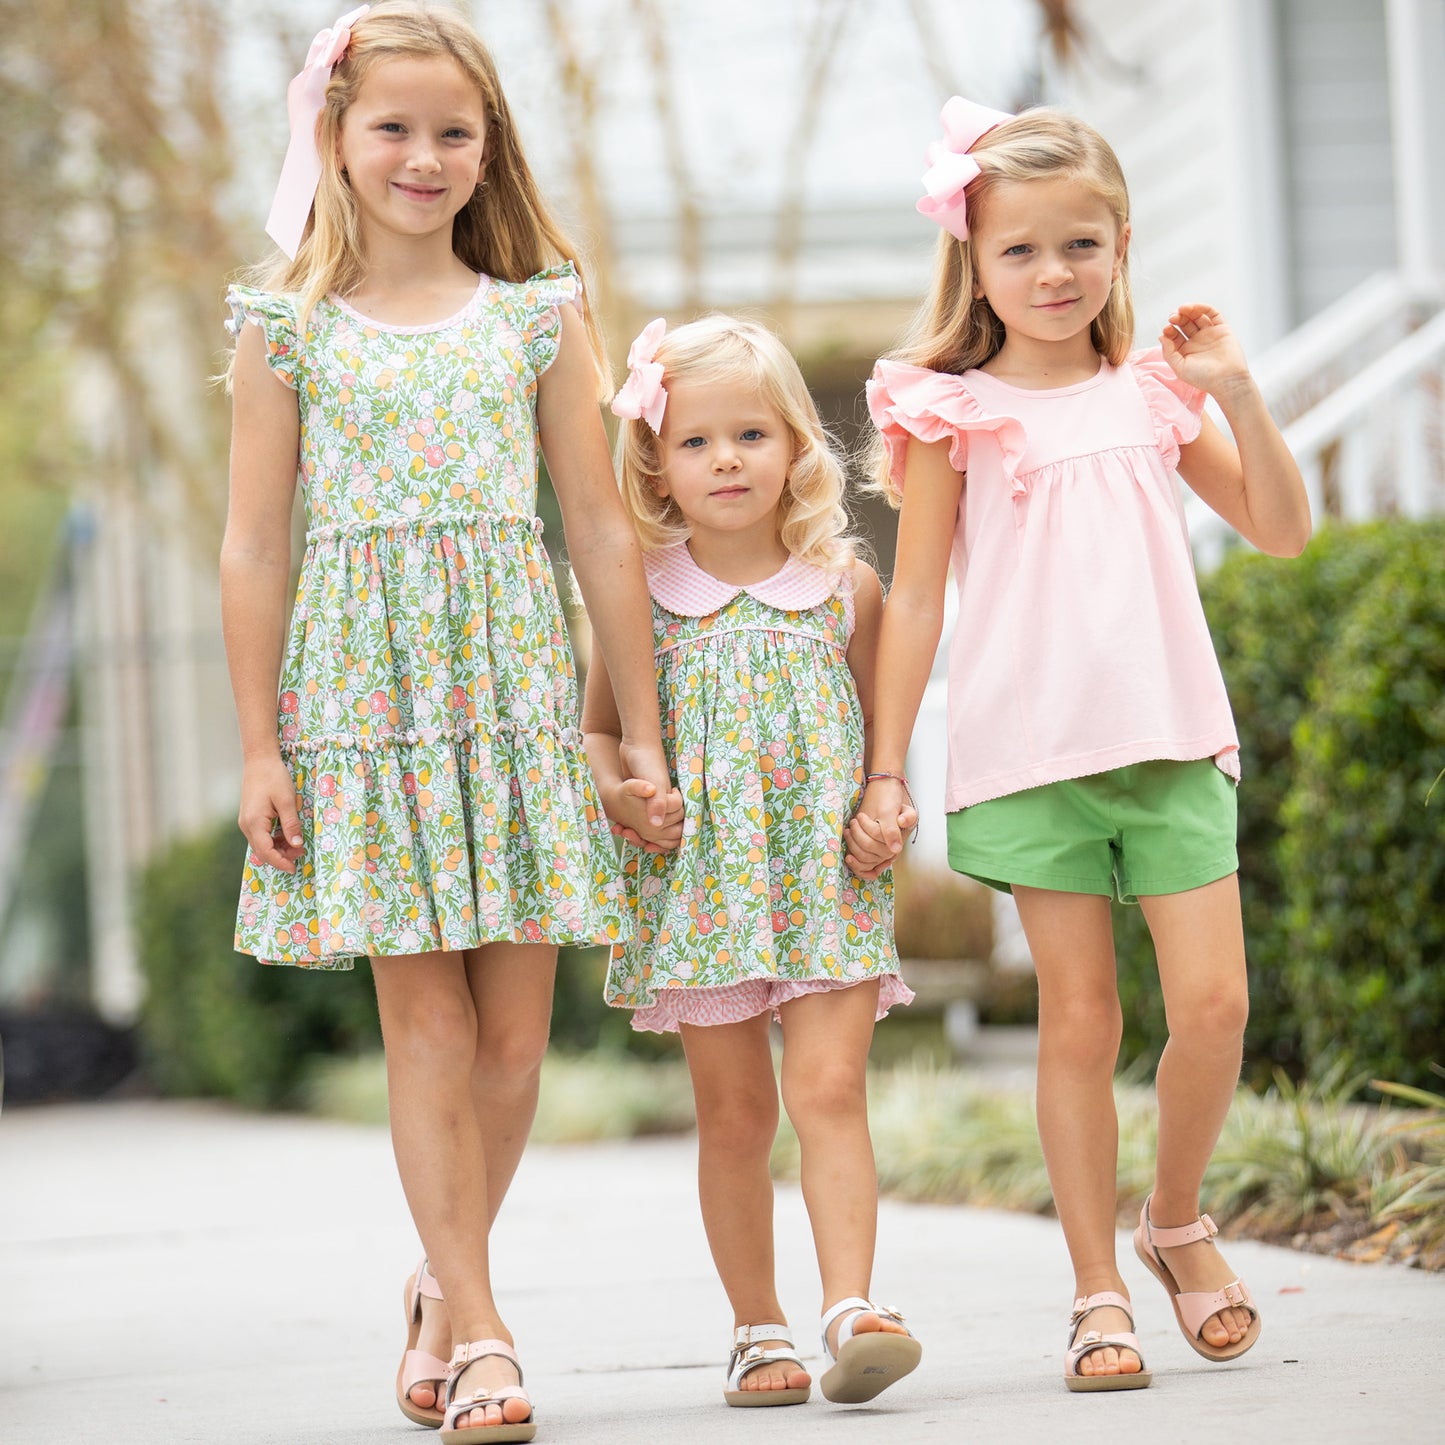 3 little girls walking down the street holding hands